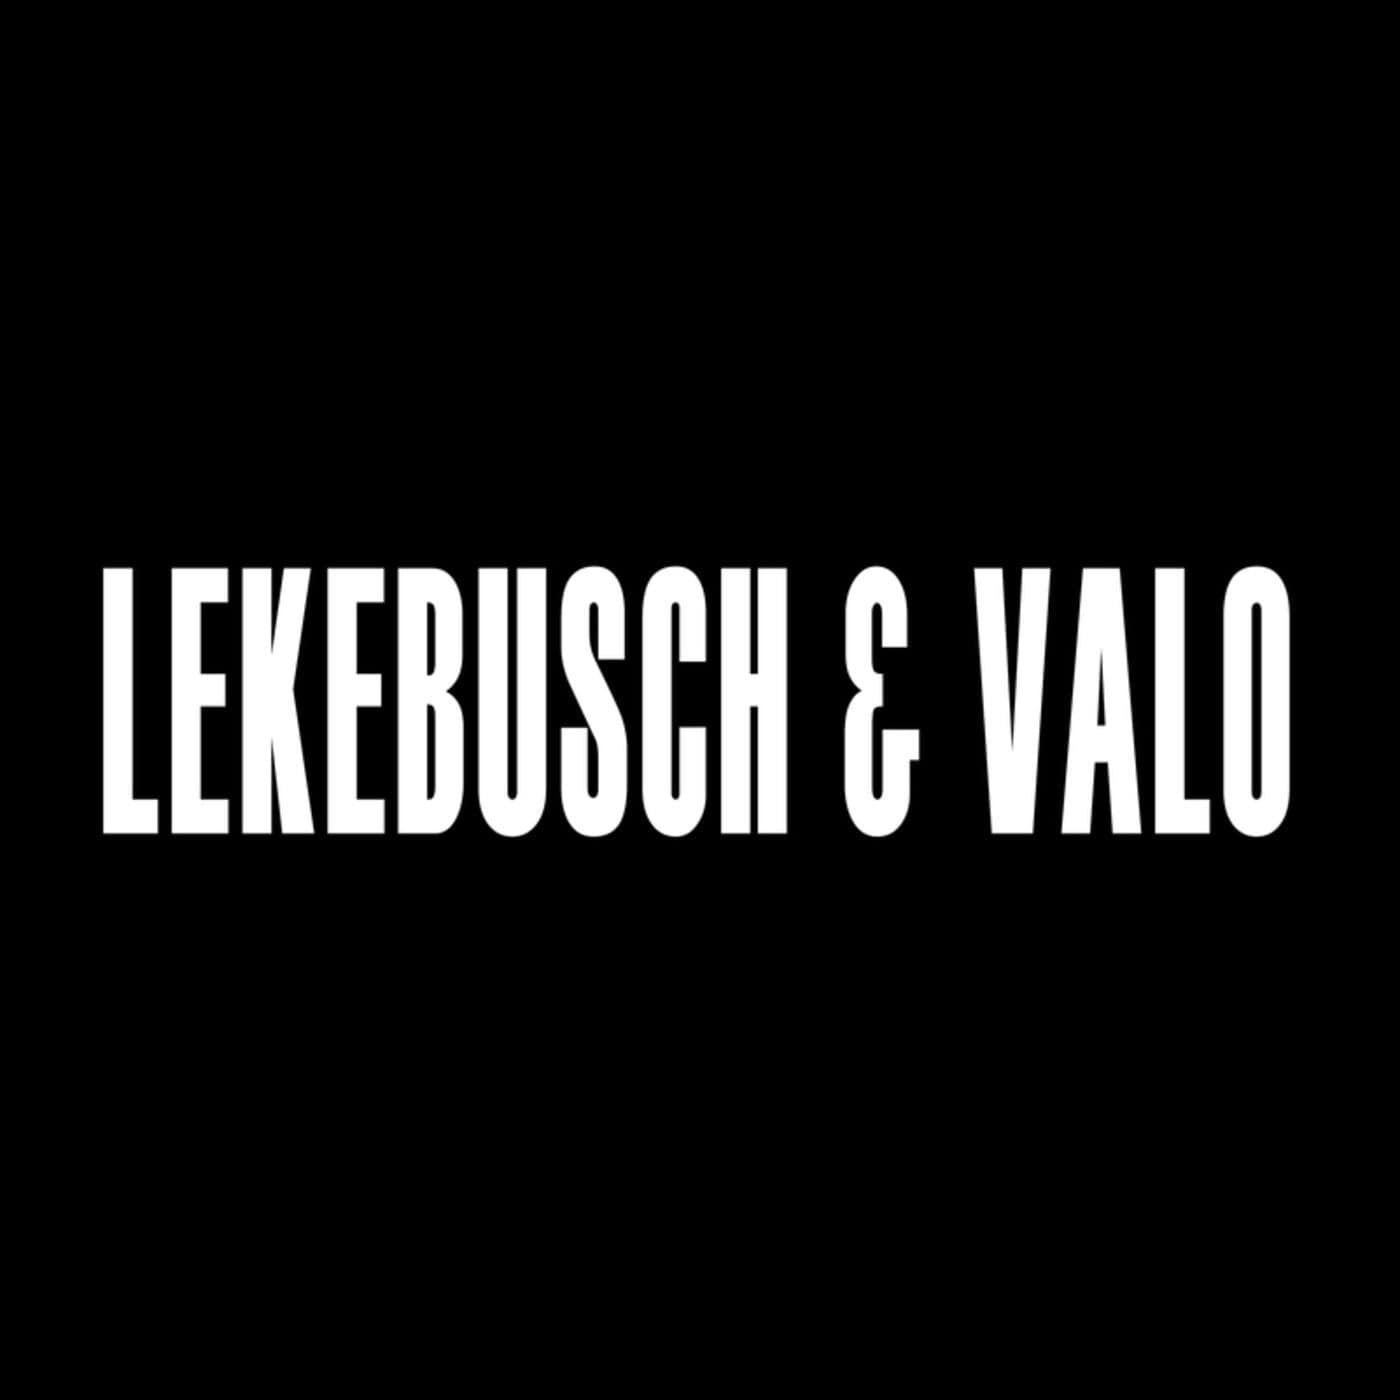 Download Valo, Lekebusch - The Gillmen on Electrobuzz